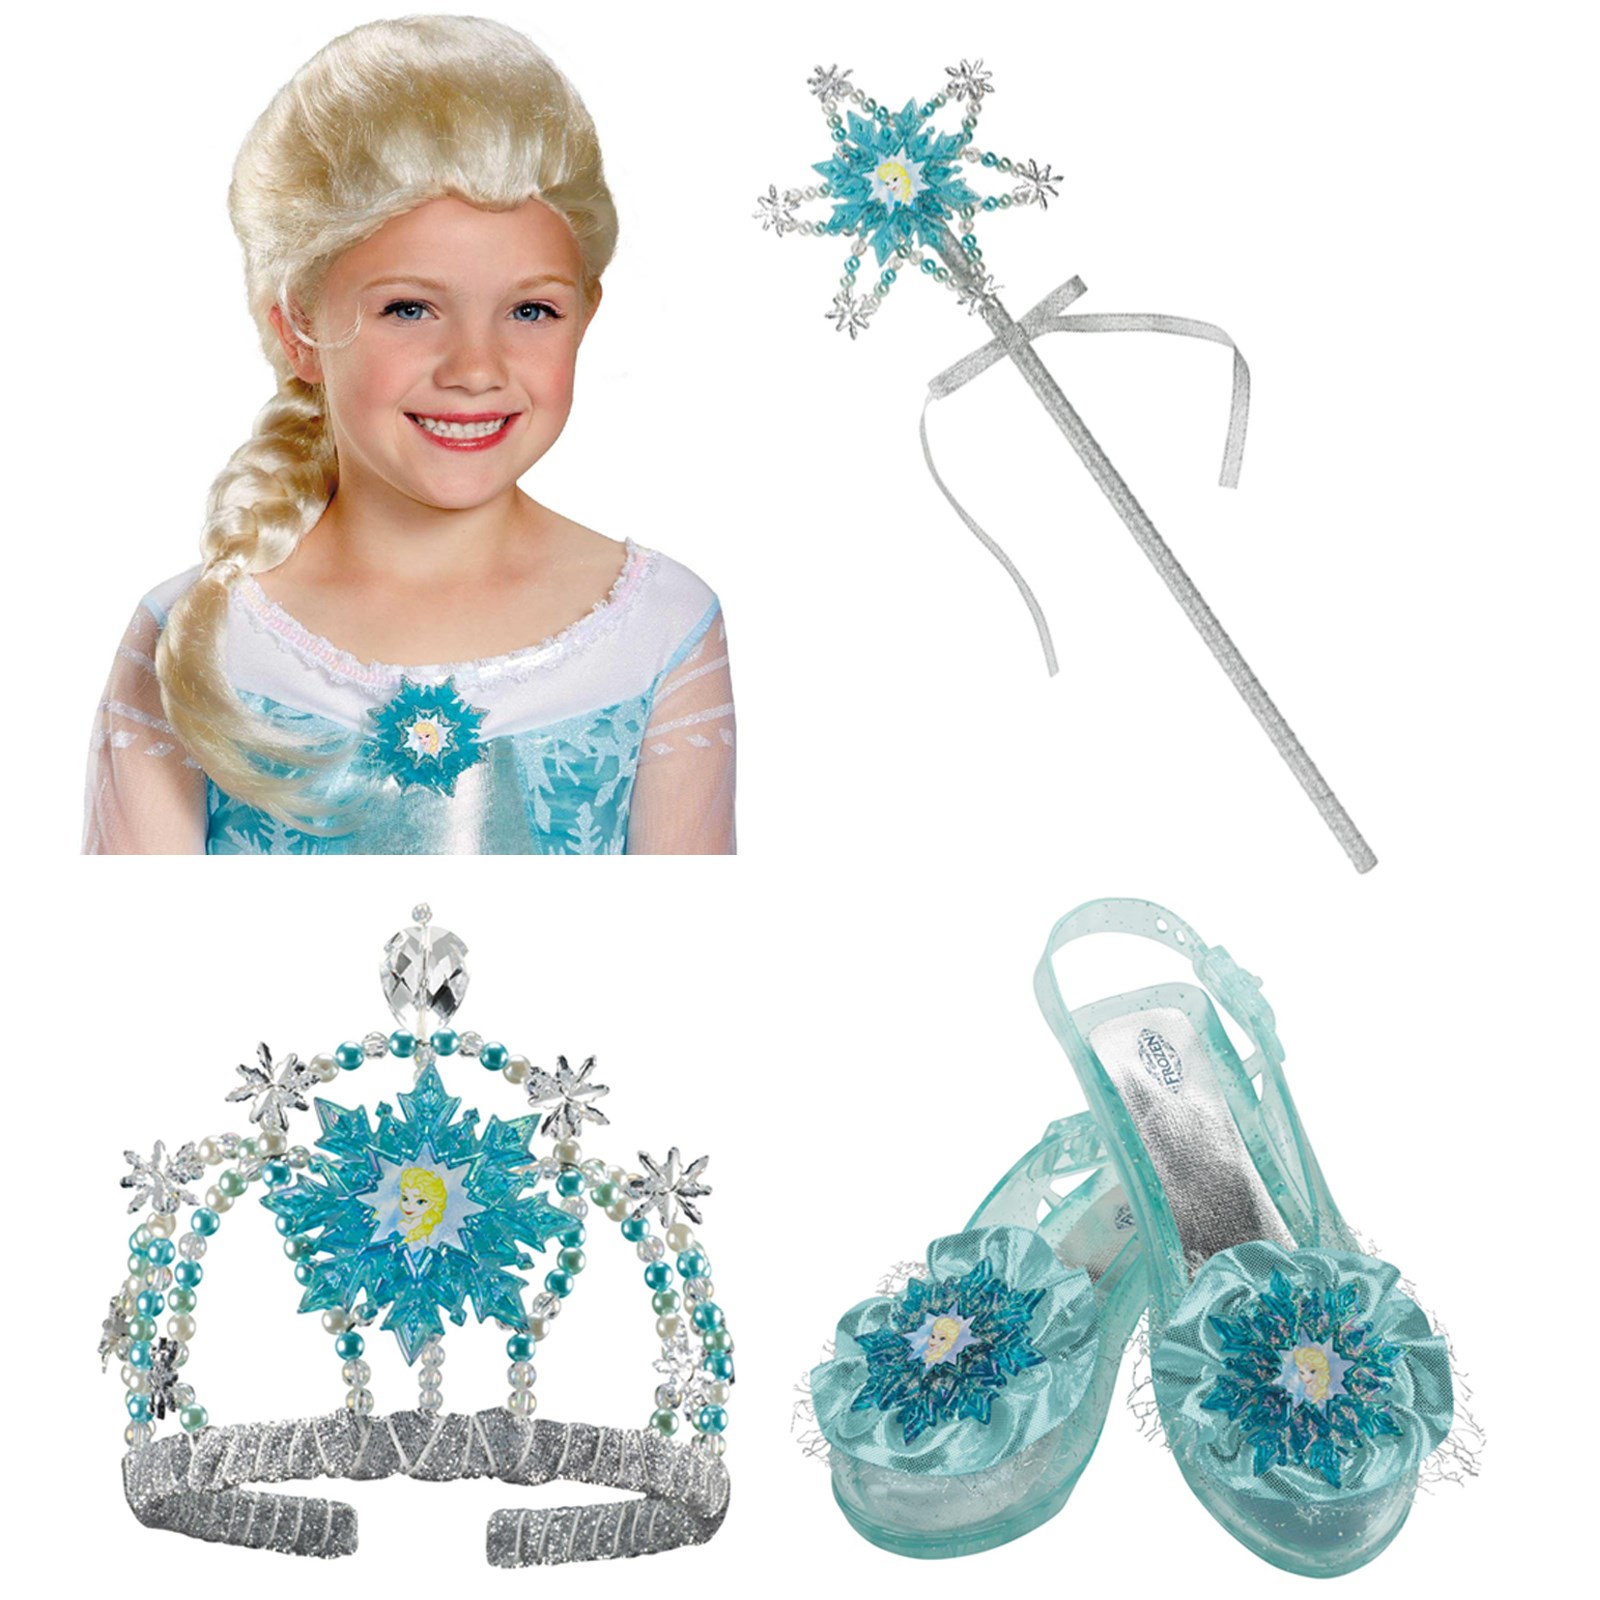 Frozen Elsa Accessories – Complete Kit